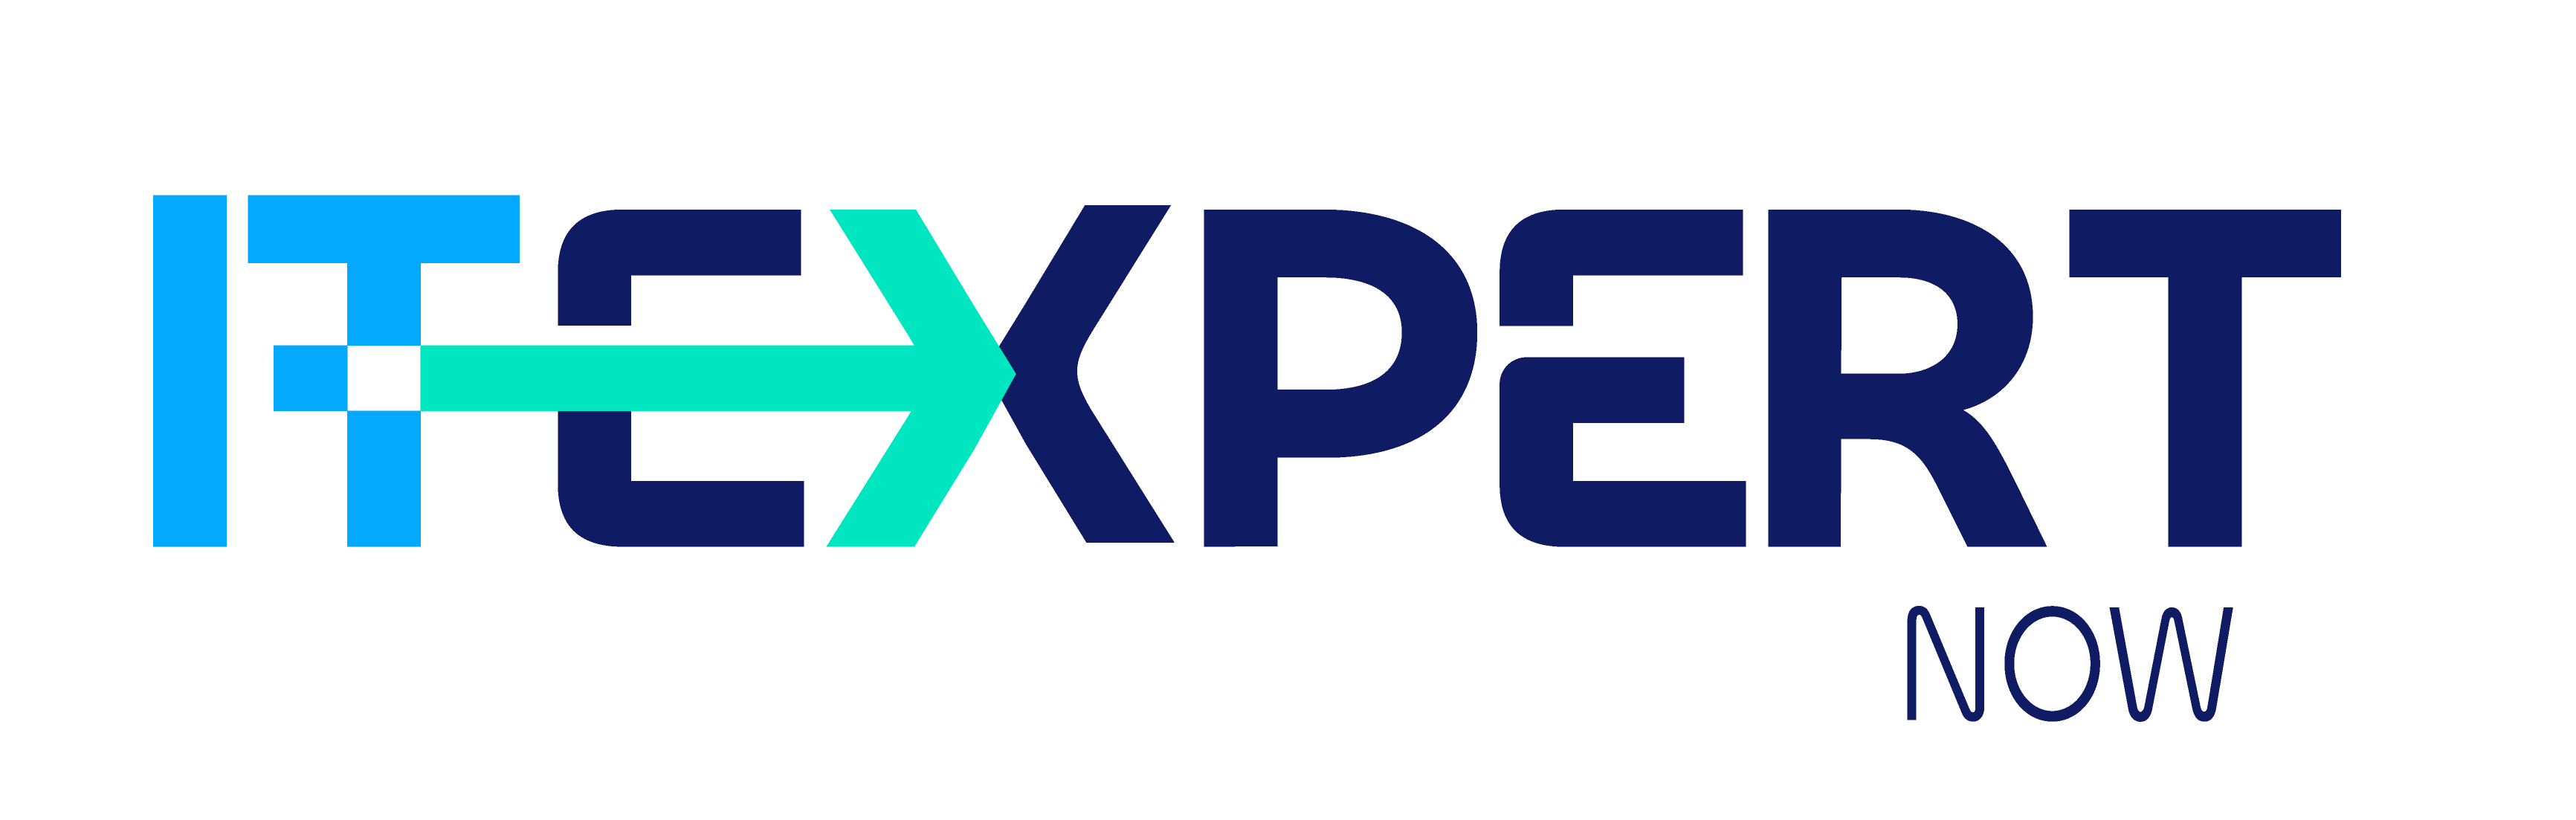 IT Expert Now logo